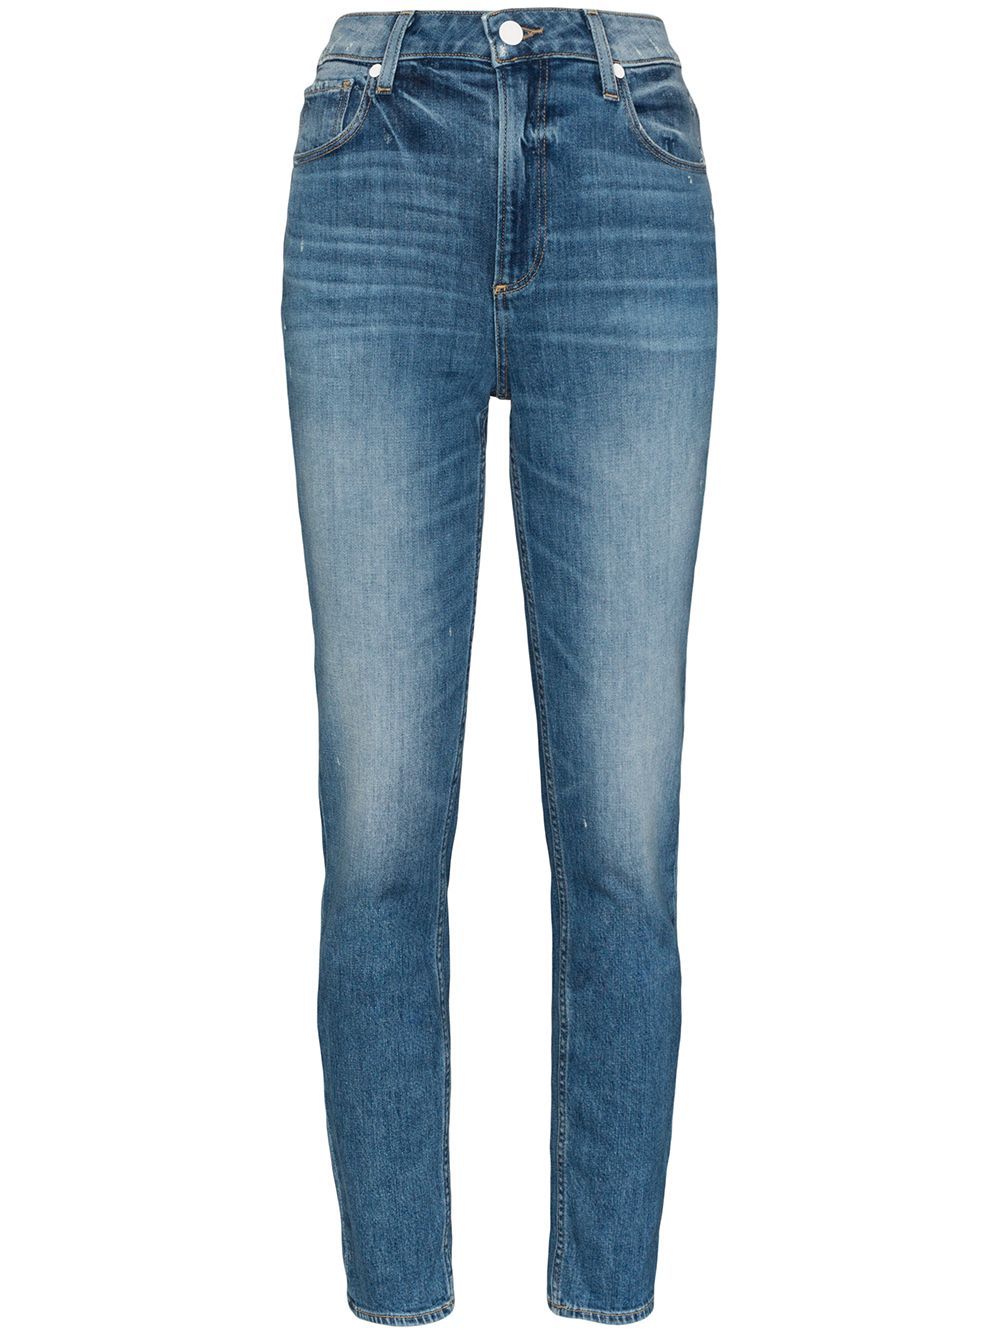 d blues jeans brand price